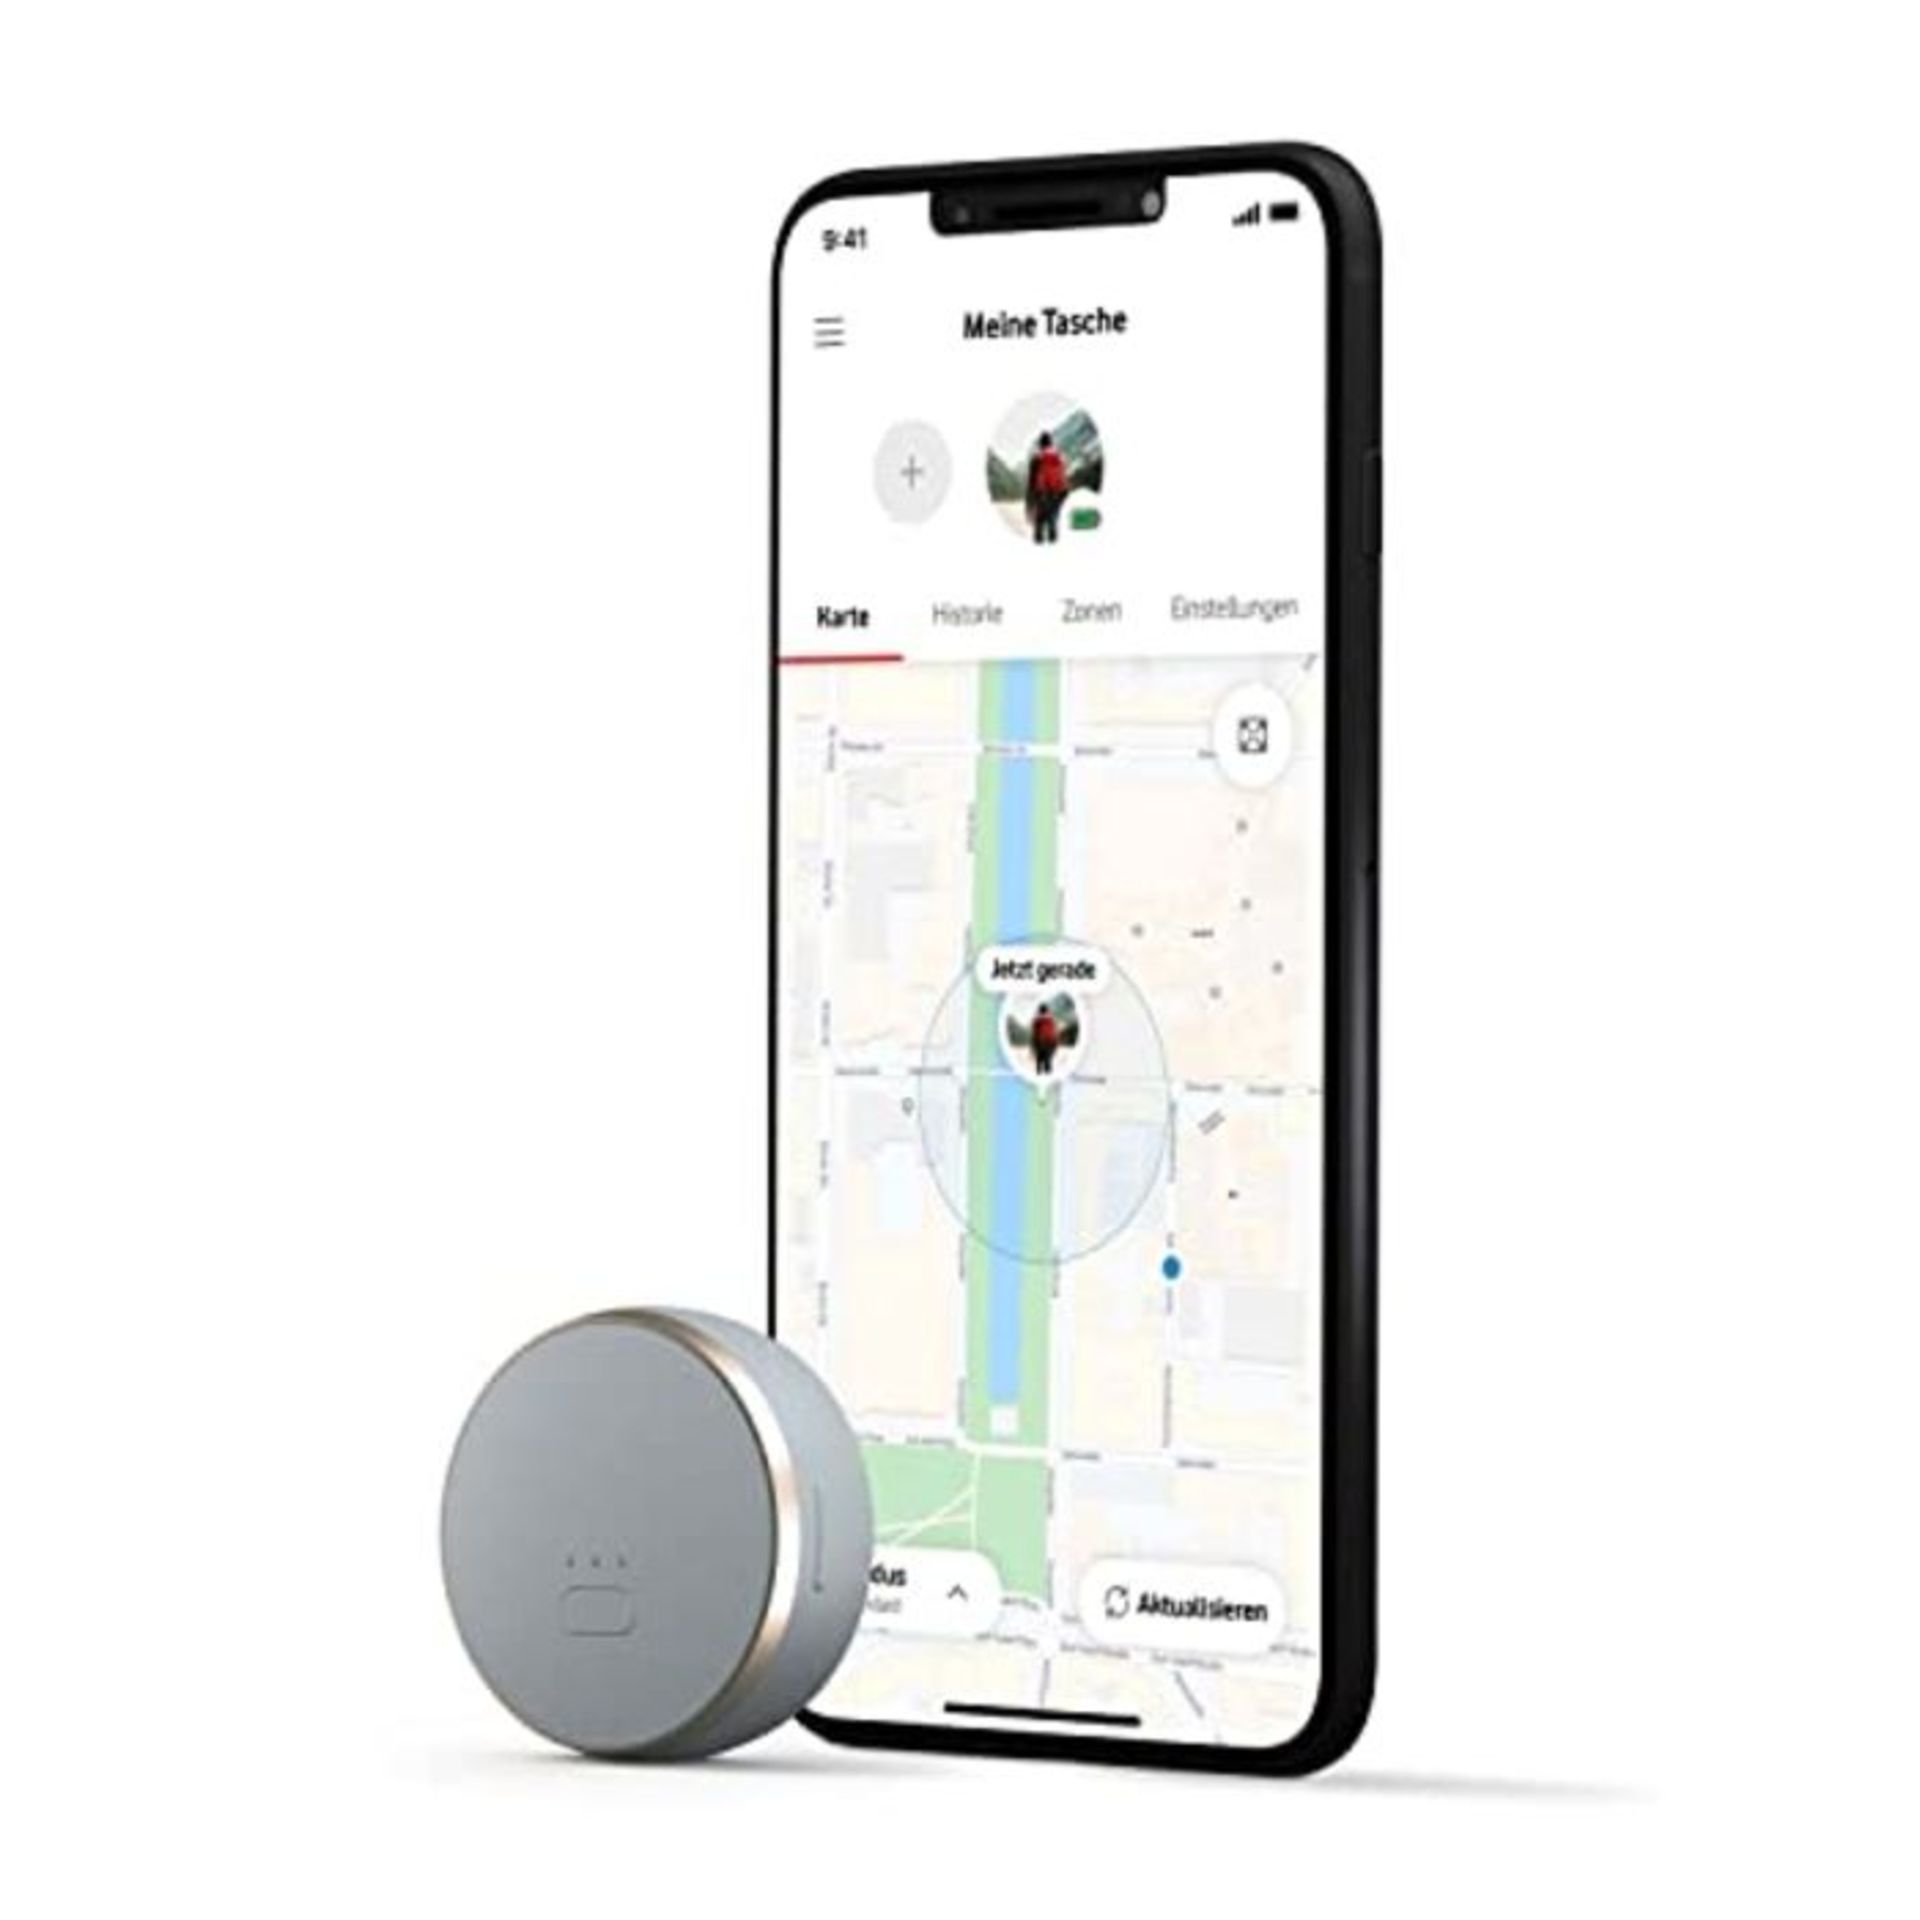 Vodafone Curve Smarter GPS-Tracker mit integrierter smart SIM, Leichter Tracker fÃ¼r